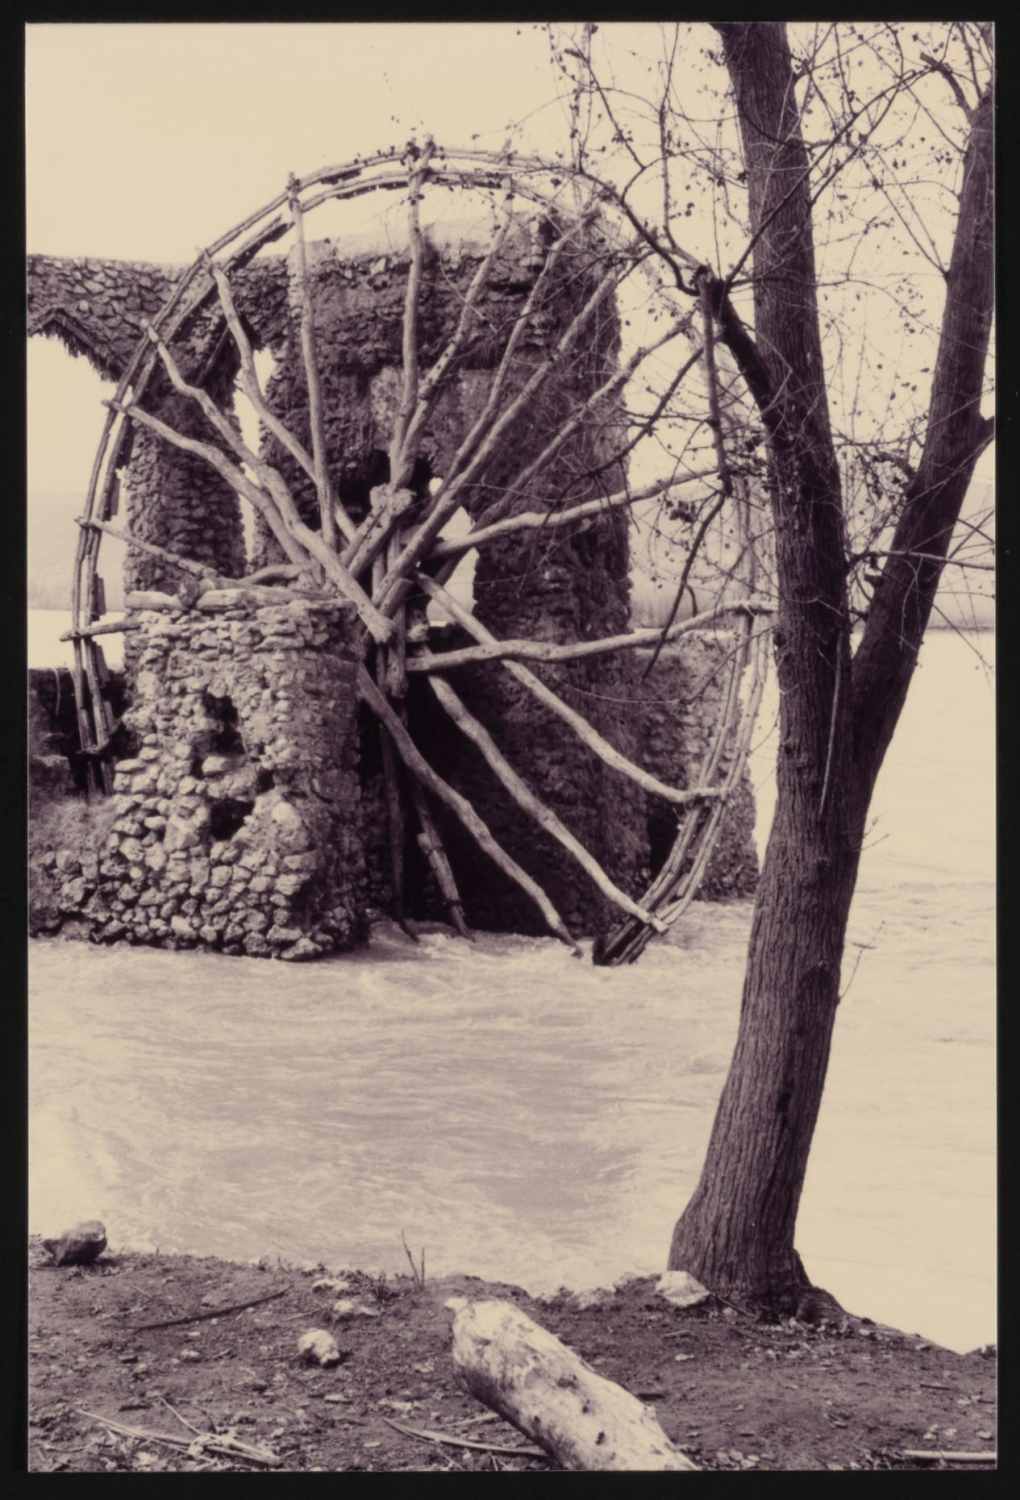 Waterwheel in Anah, Iraq.